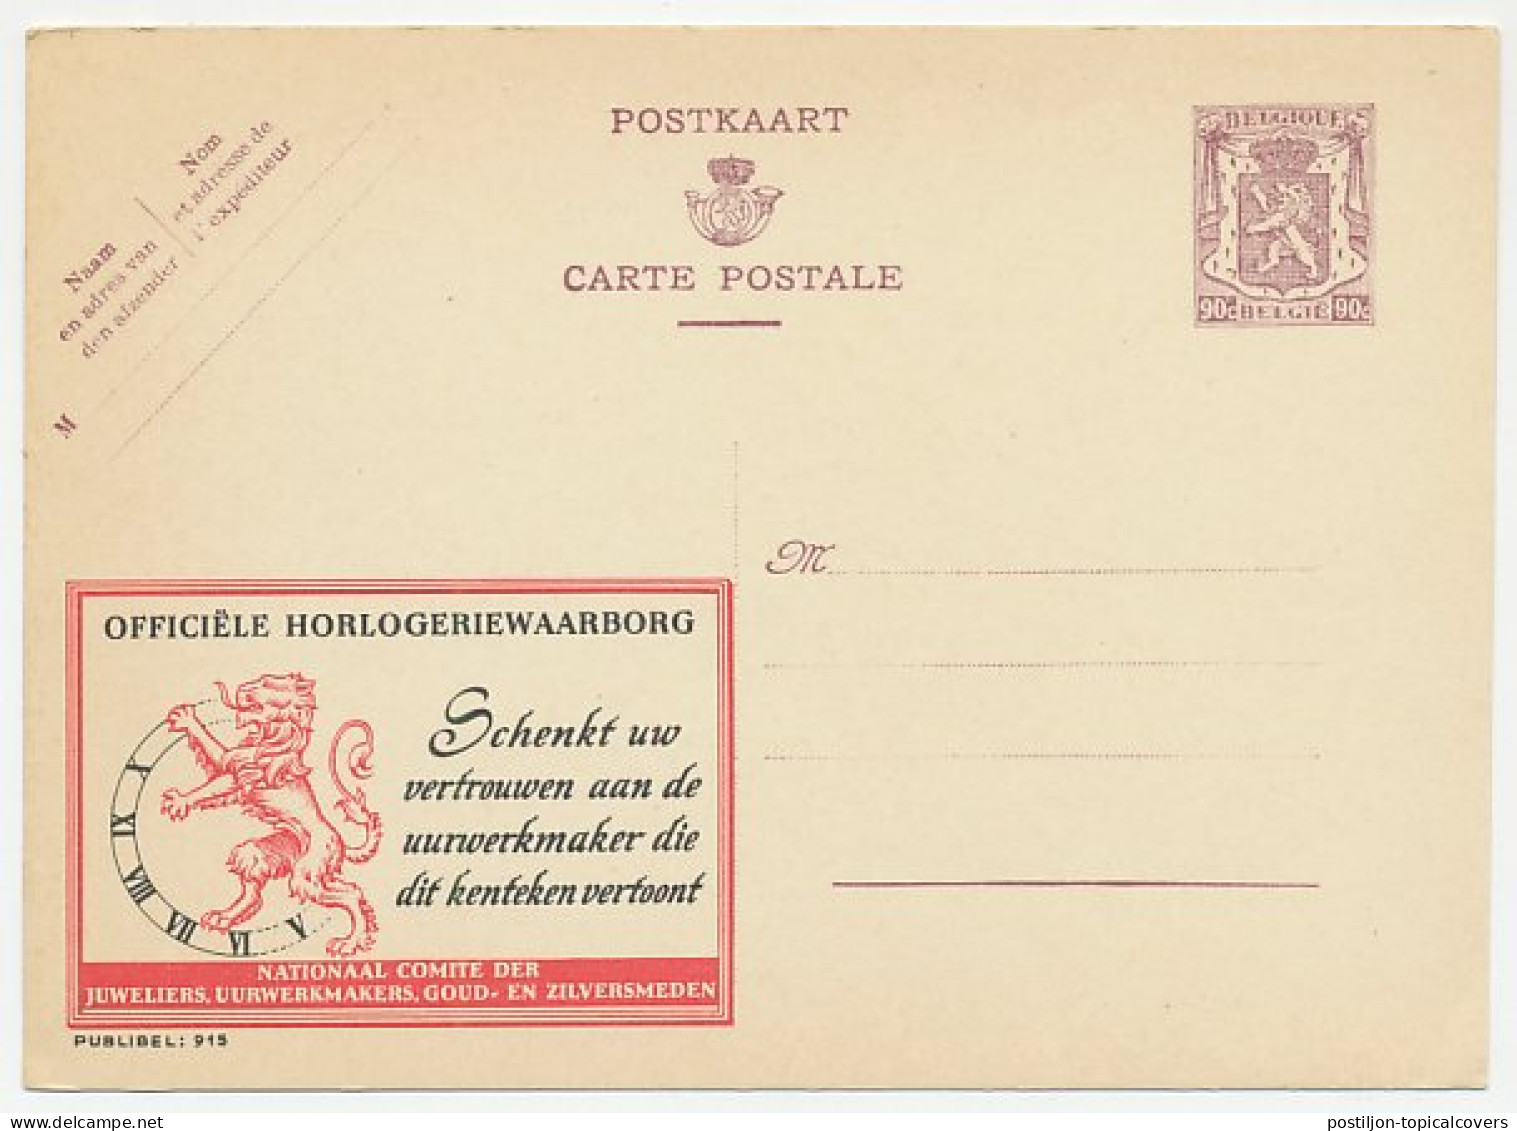 Publibel - Postal Stationery Belgium 1948 Watch - Lion - Orologeria